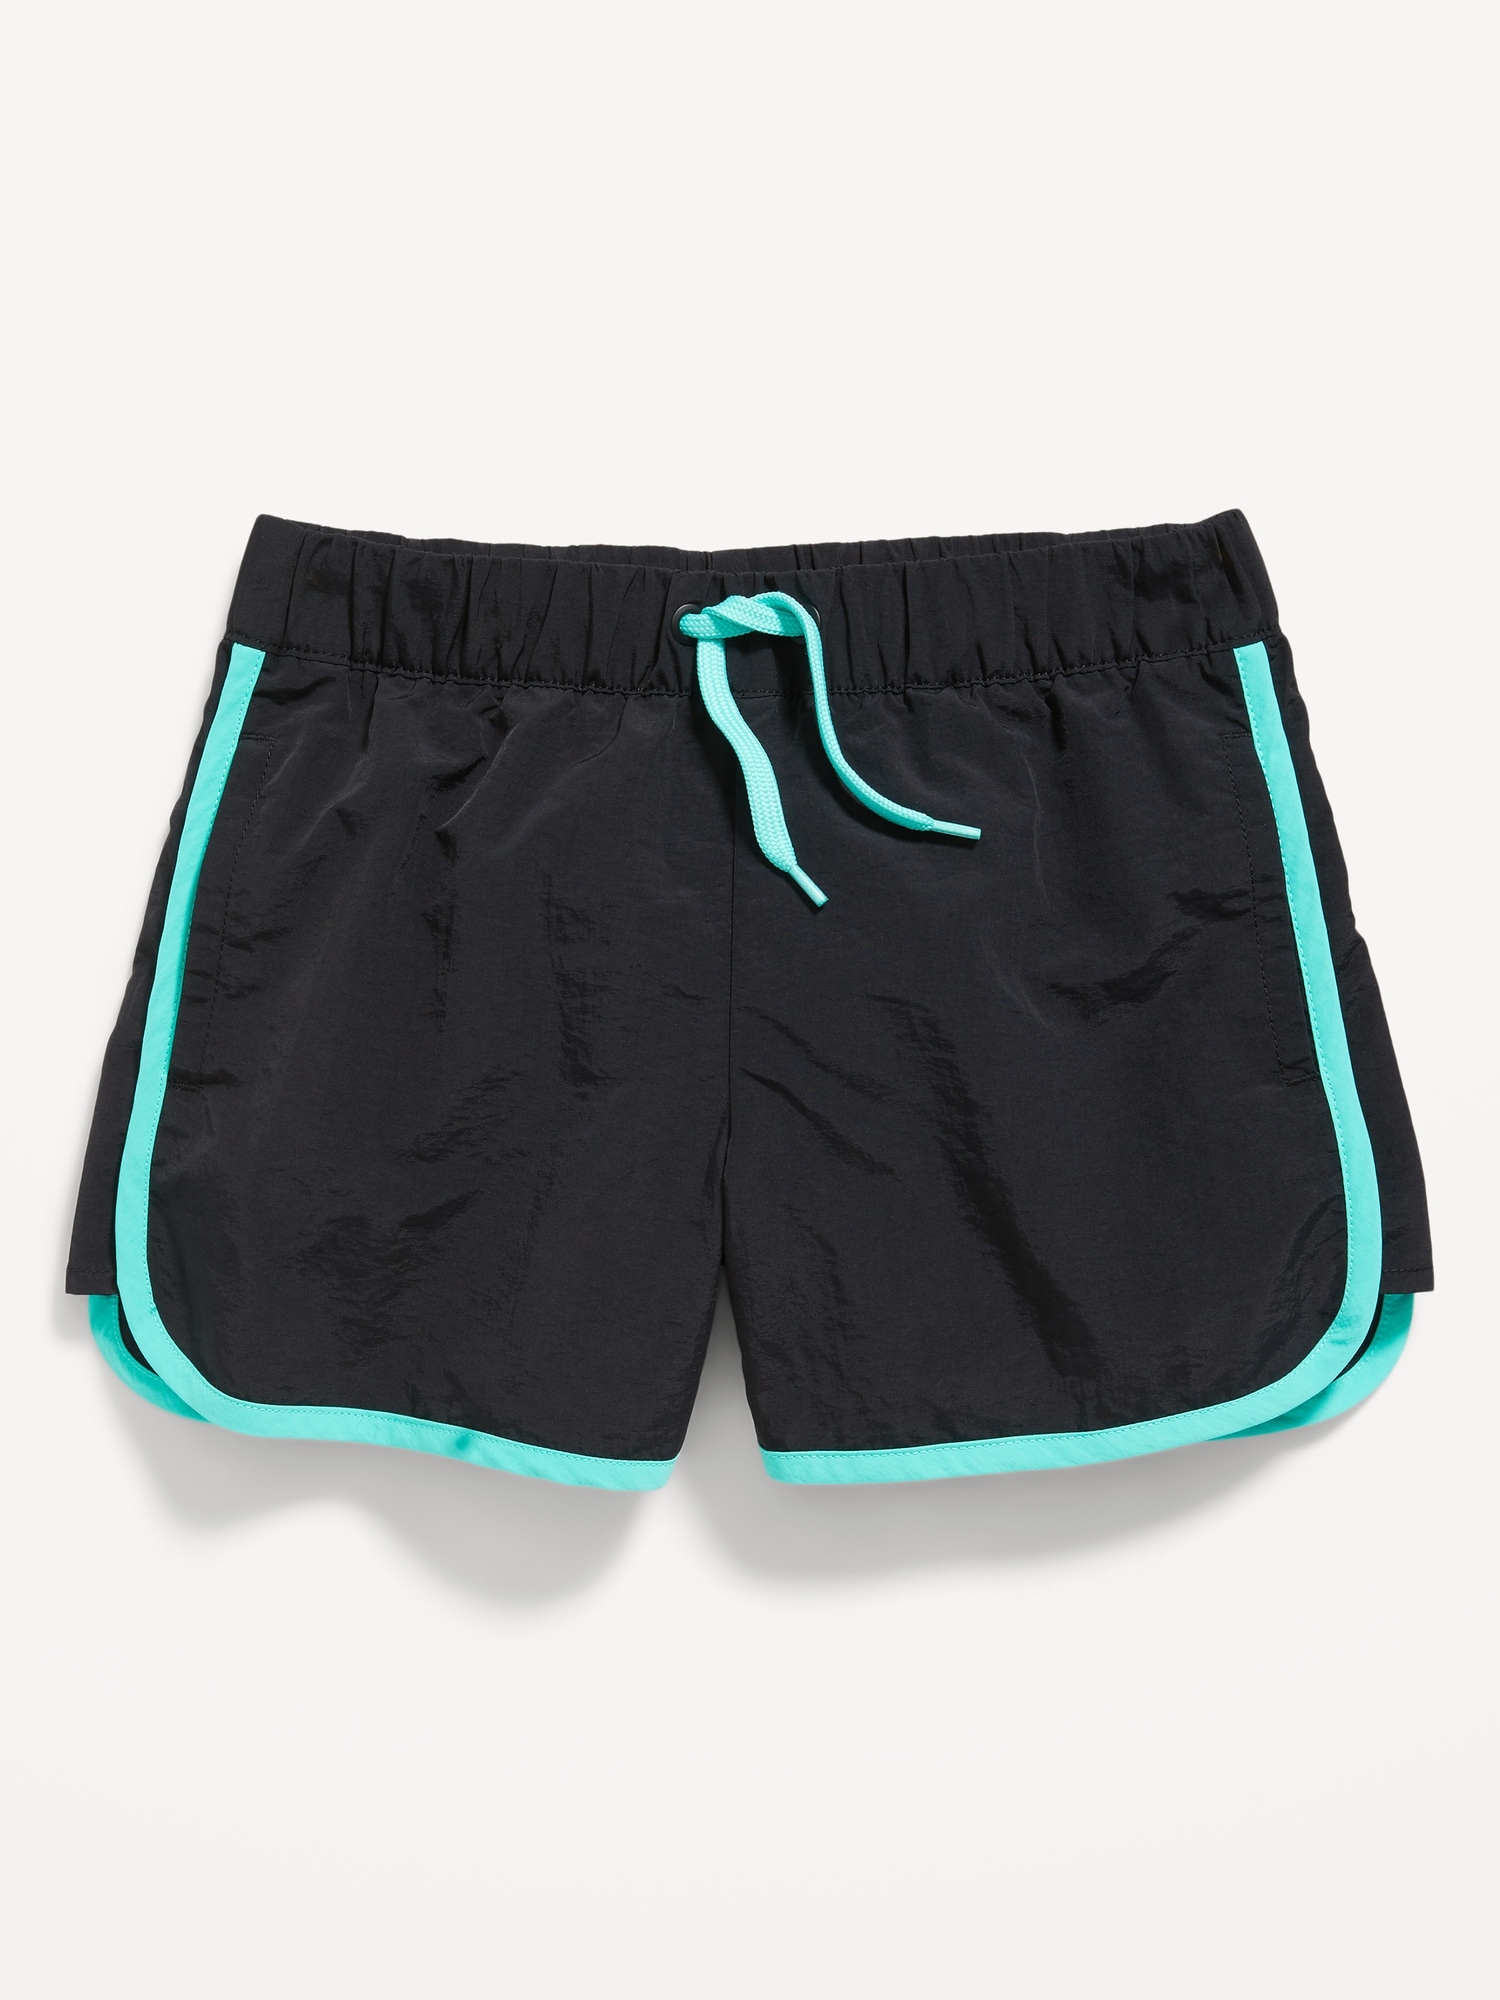 Solid Board Shorts -- 6-inch inseam